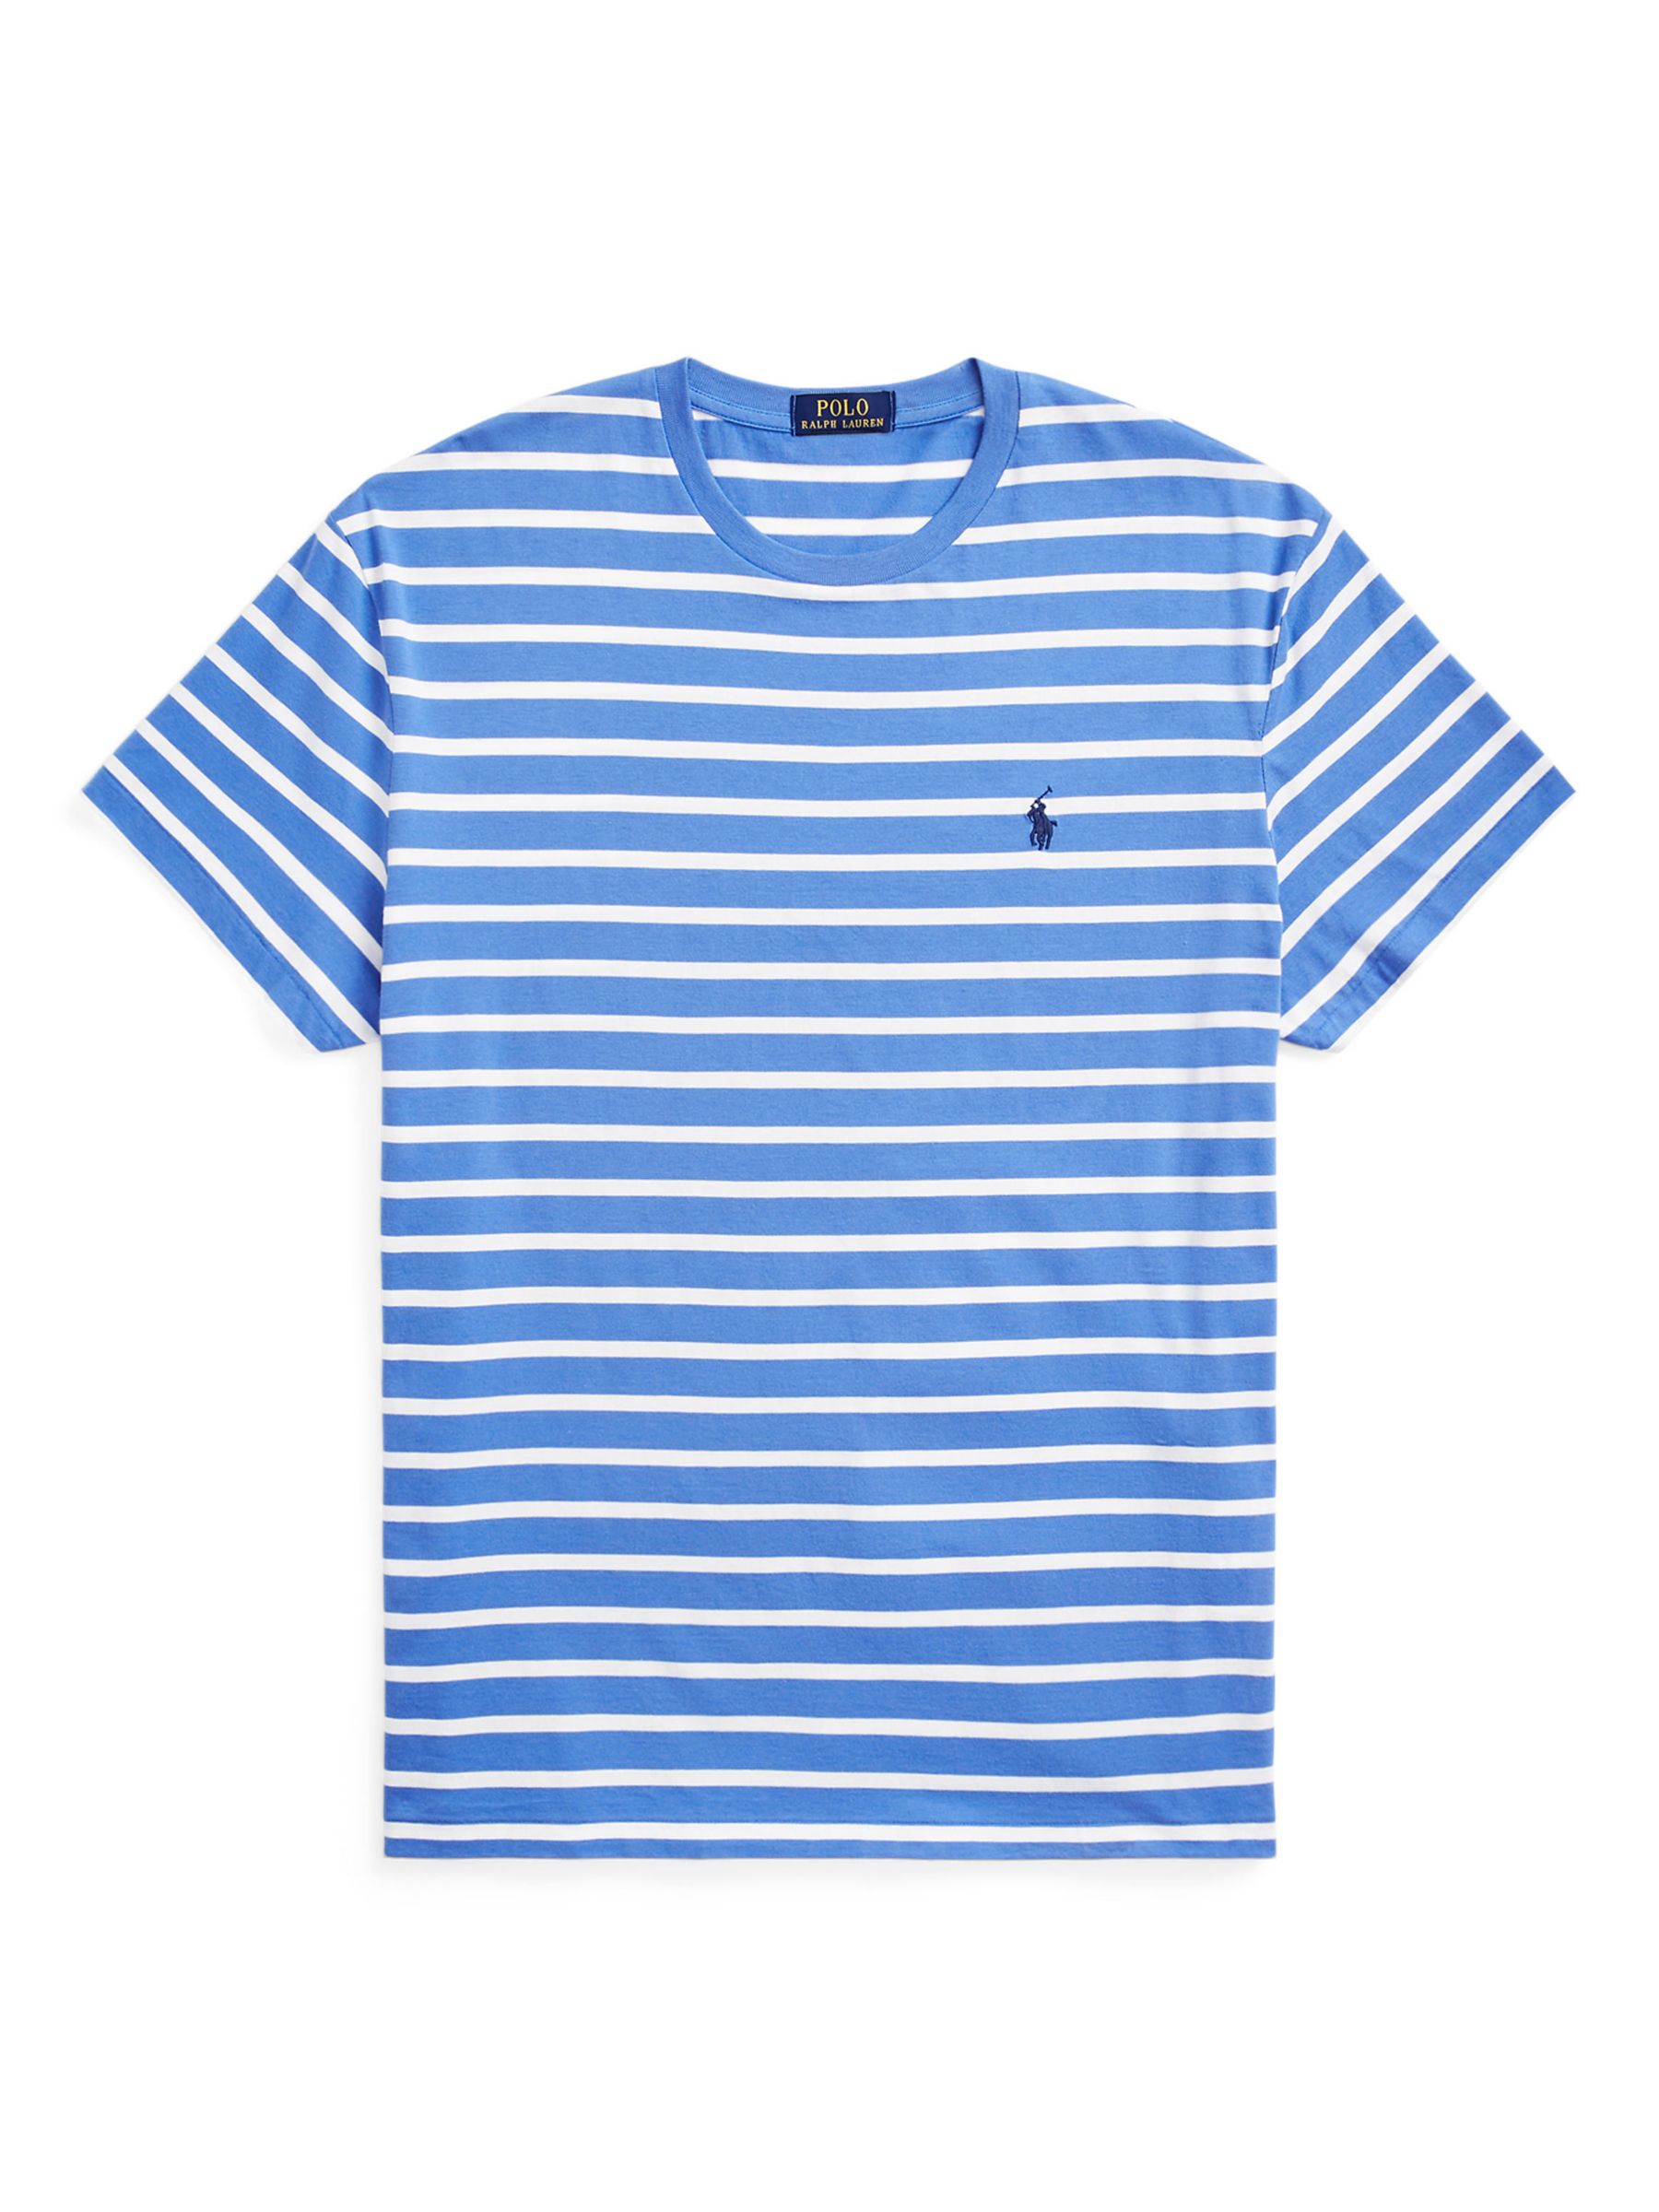 Ralph Lauren Striped Cotton T-Shirt, Blue/White, S